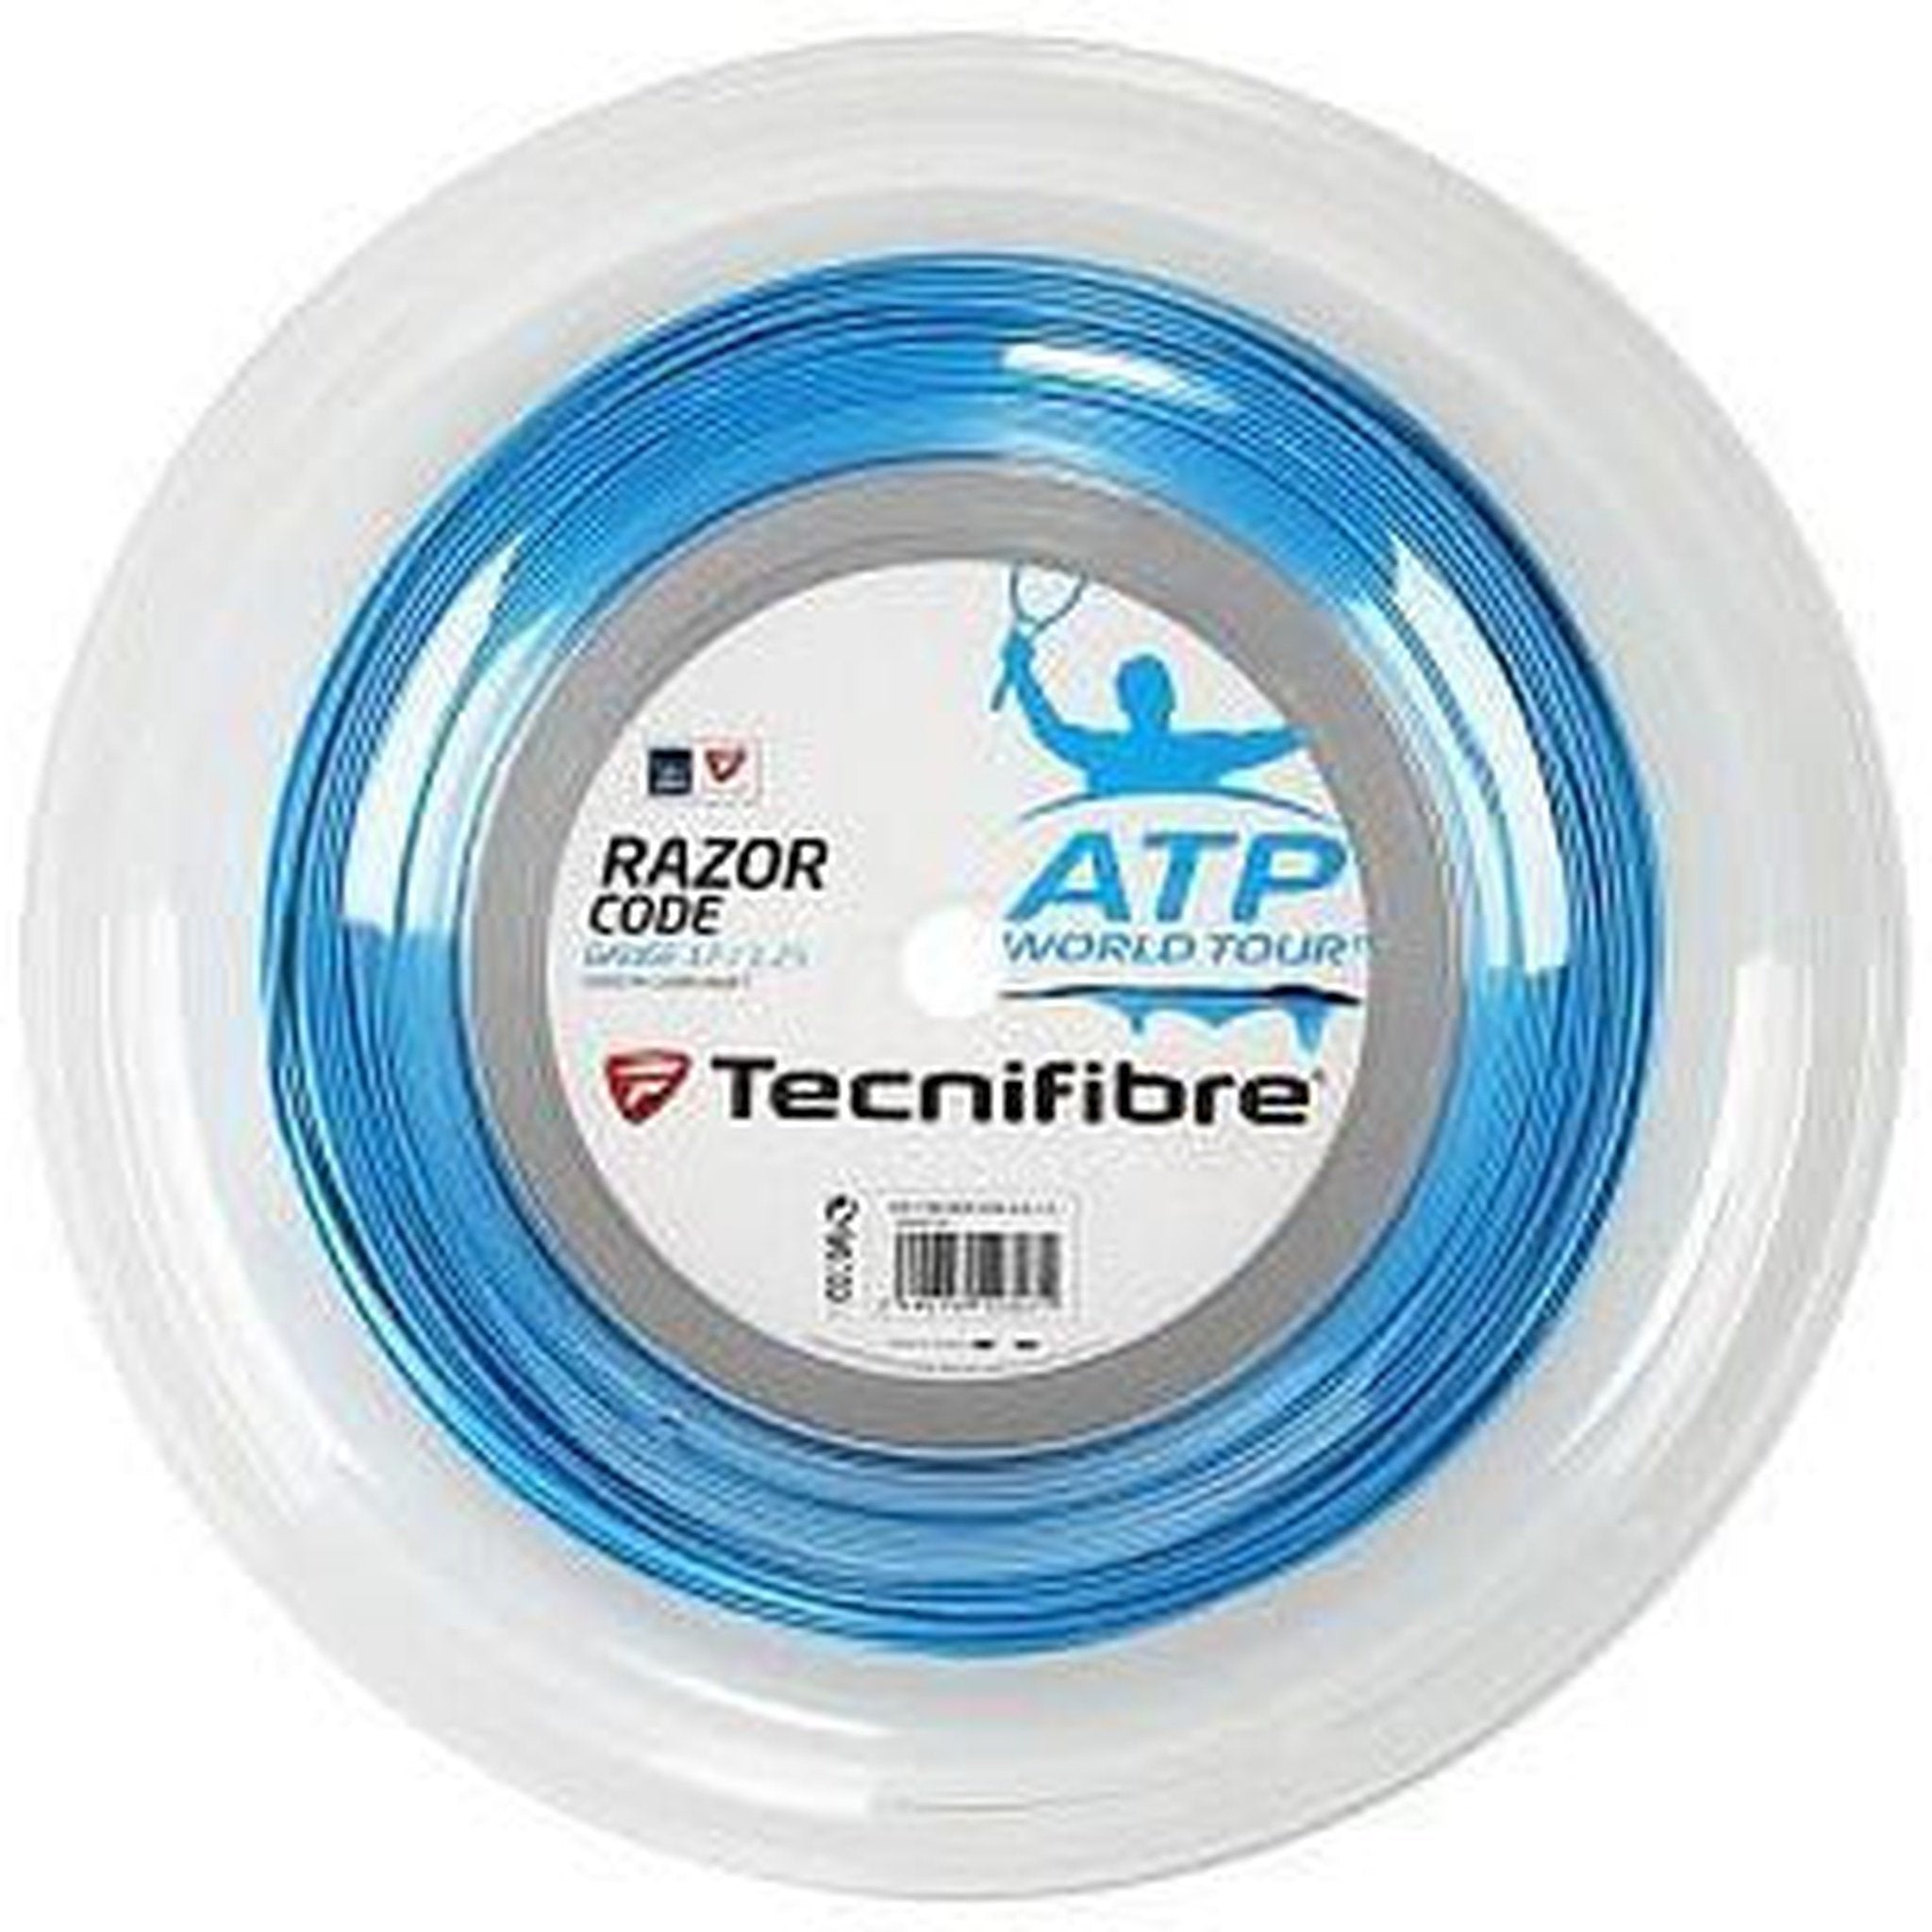 Tecnifibre Razor Code ATP Tennis String Reel - Various Colours